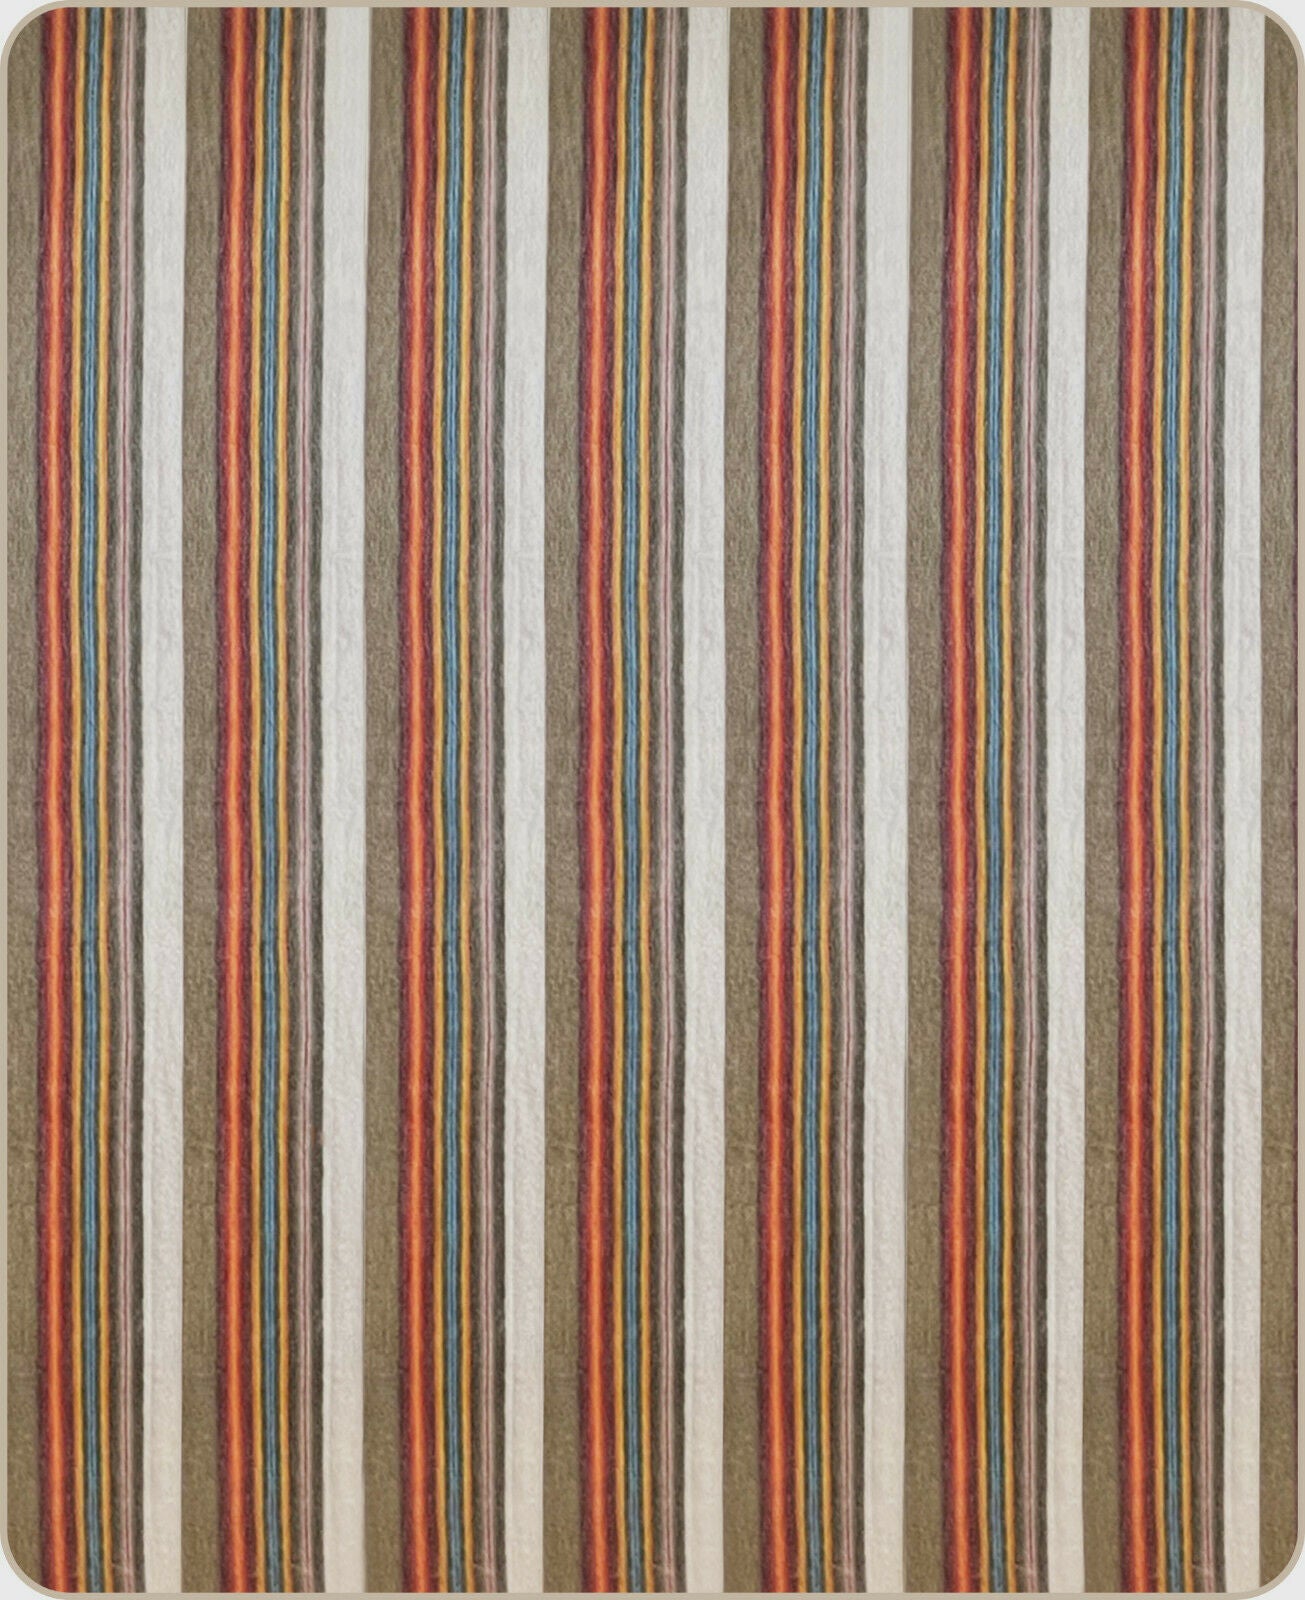 Pita - Baby Alpaca Wool Throw Blanket / Sofa Cover - Queen 97" x 67" - multi coloured thin stripes pattern